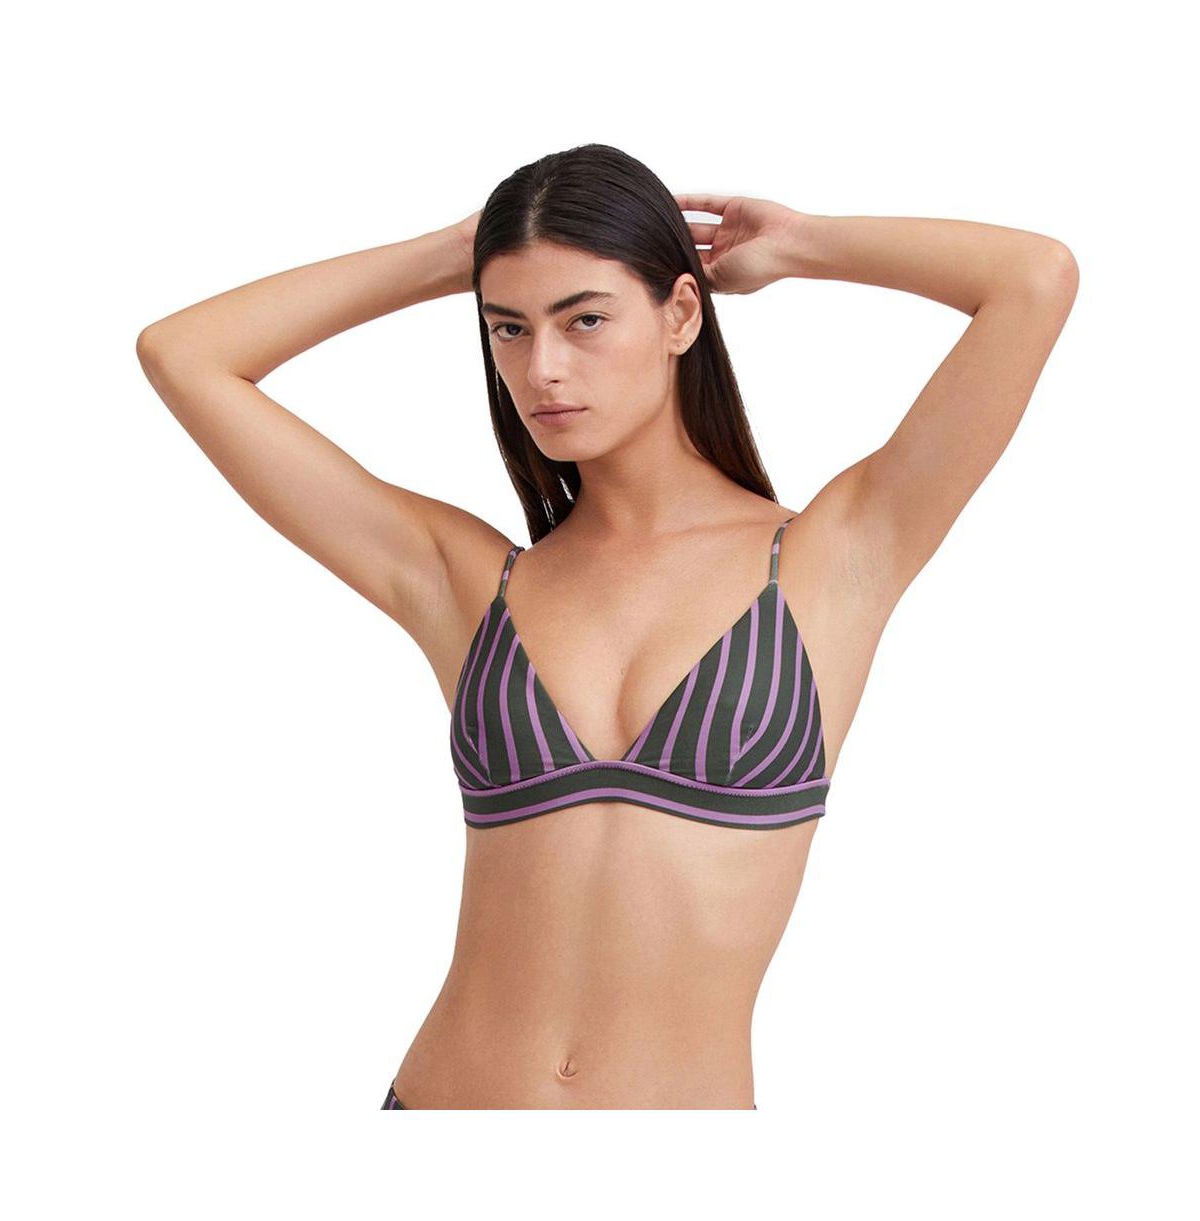 Women's Textured Triangle bikini bra swim top - Dusk mauve